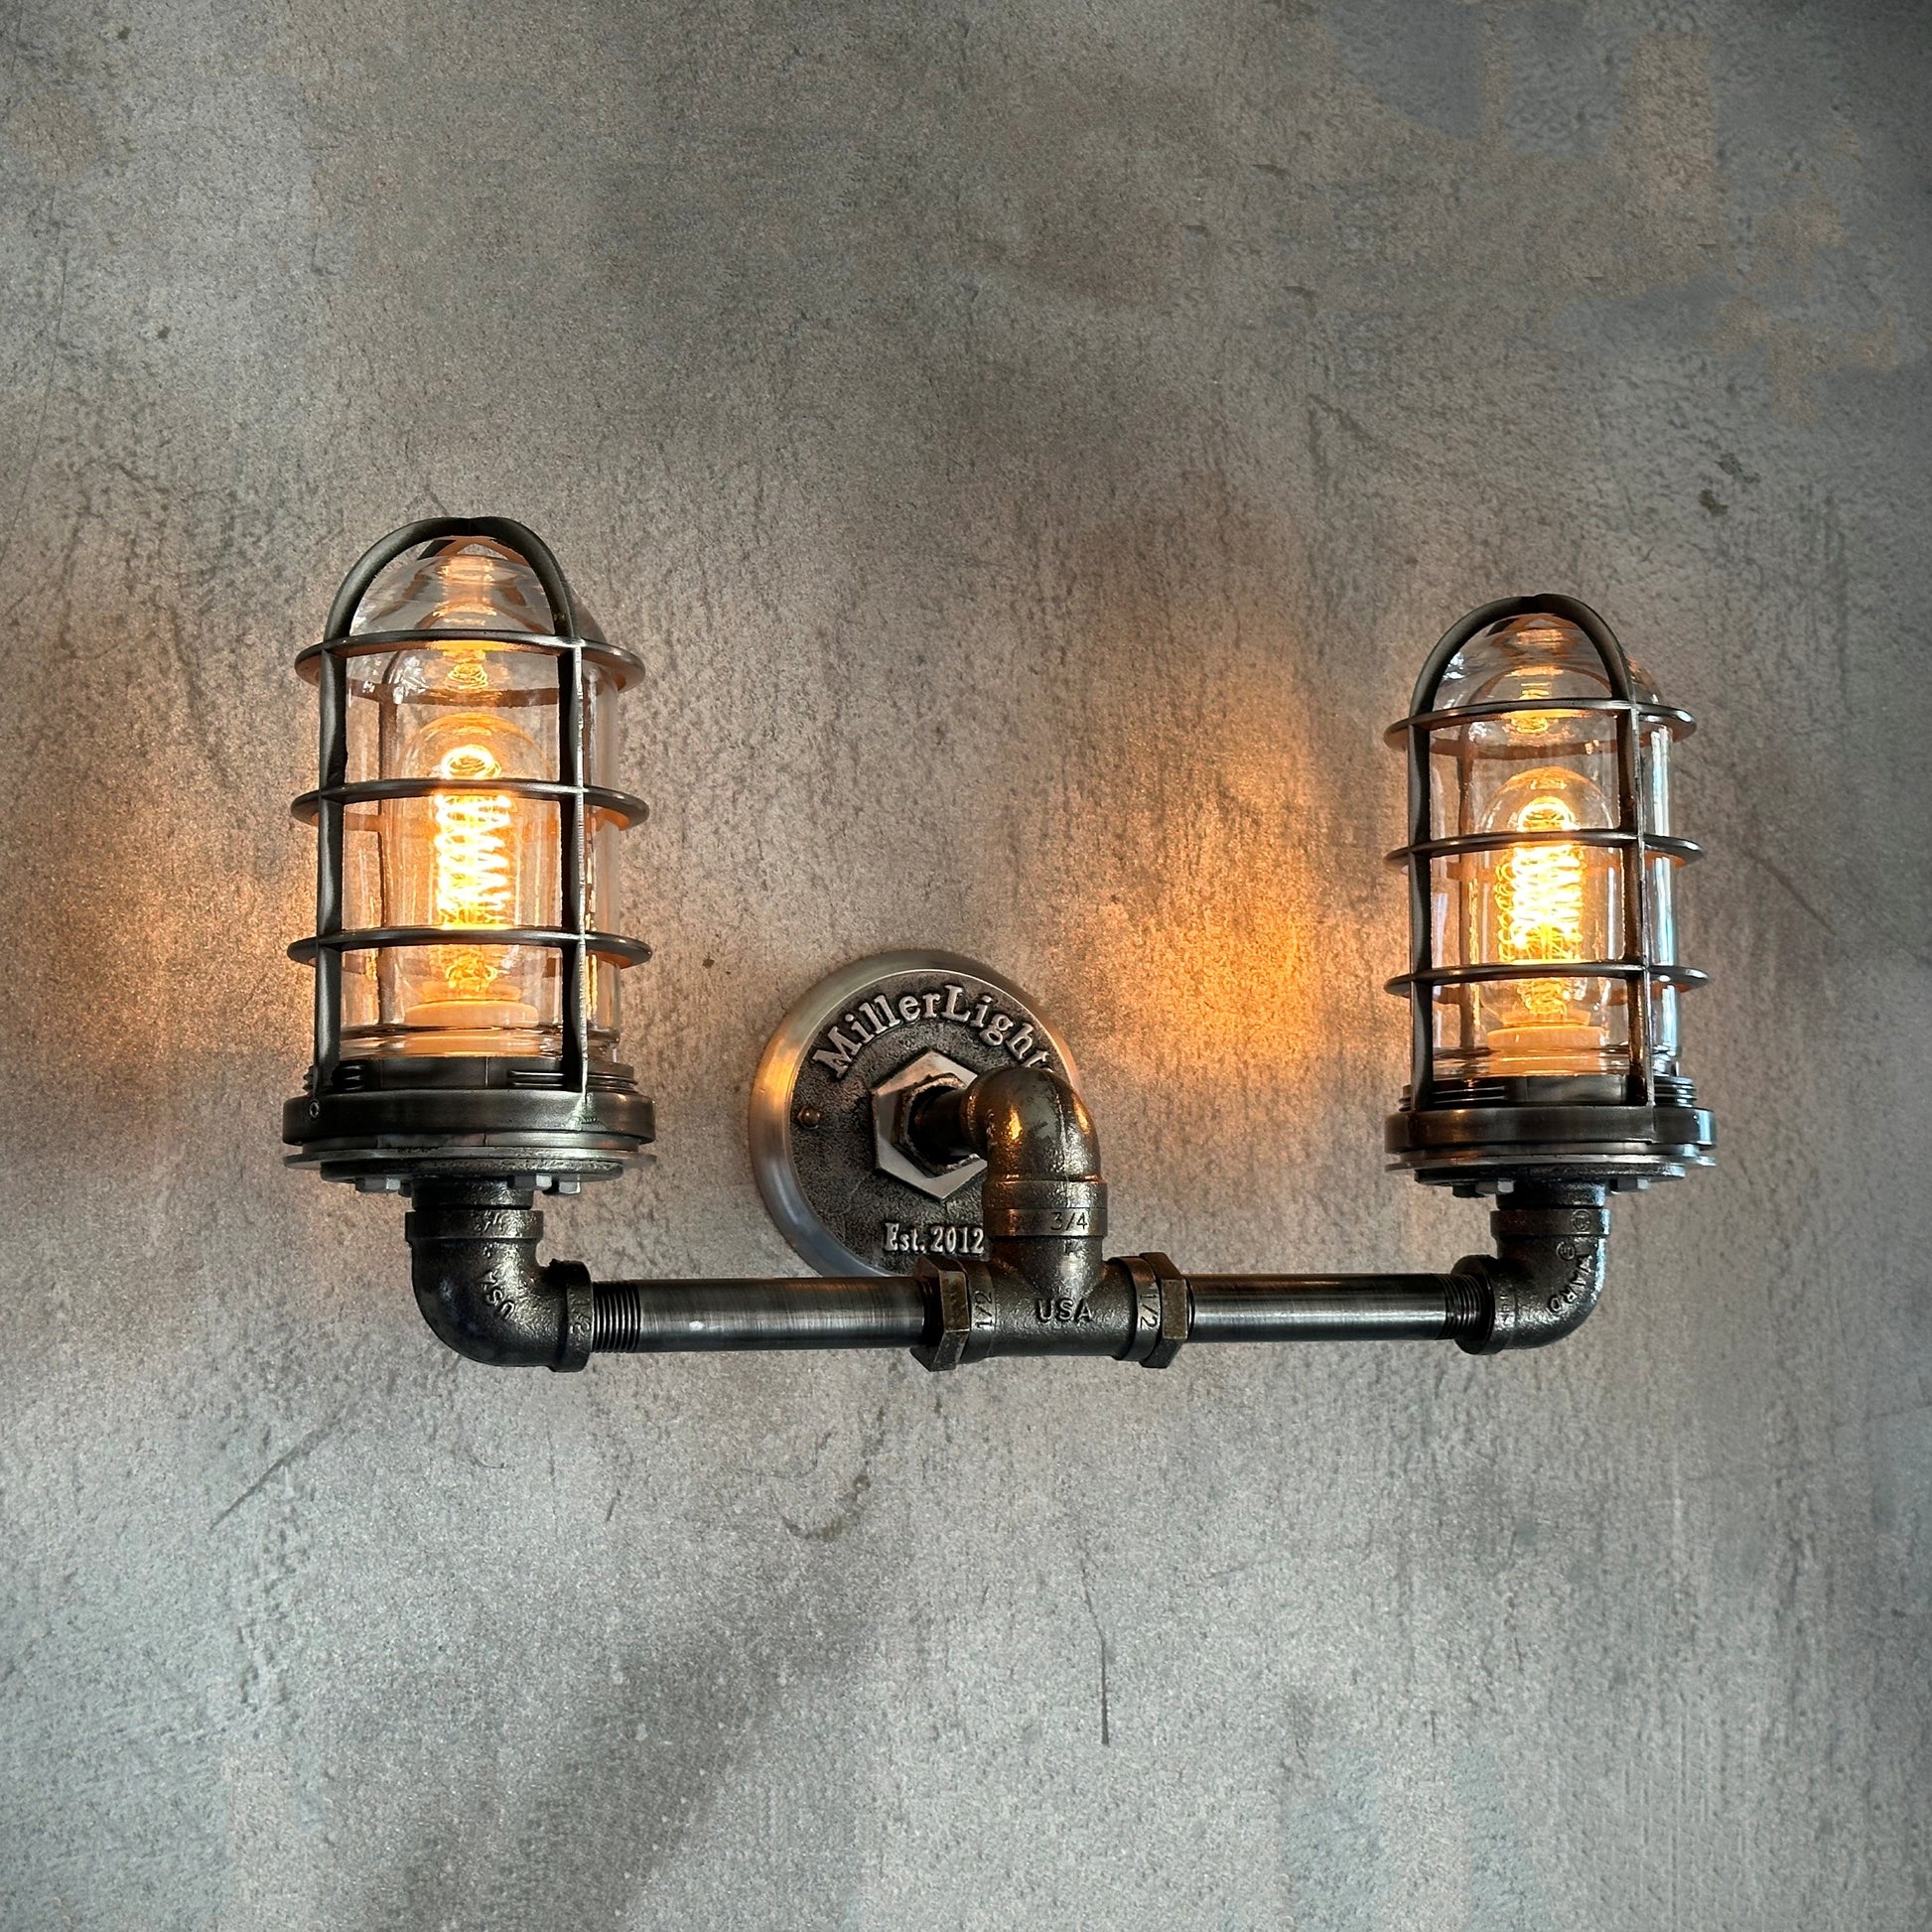 blick pipe wall light fixture rustic industrial millerlights 